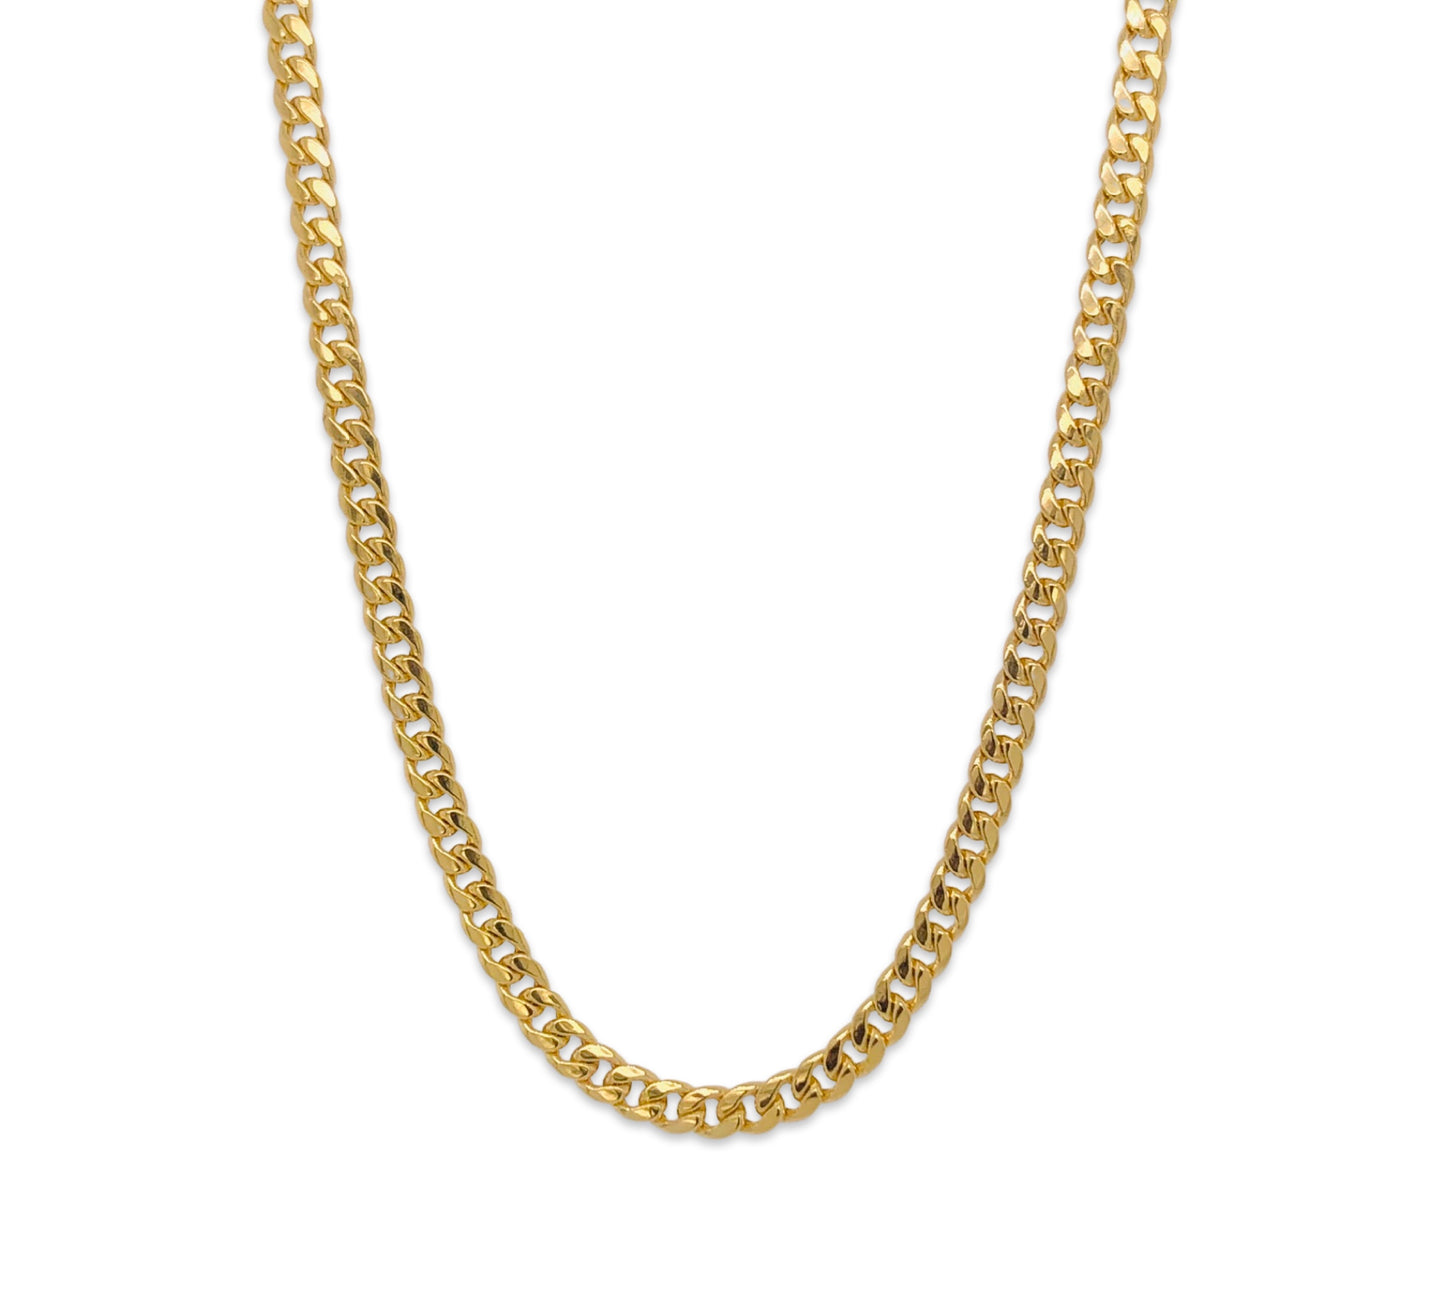 10k yellow gold miami cuban chain -everyday wear 